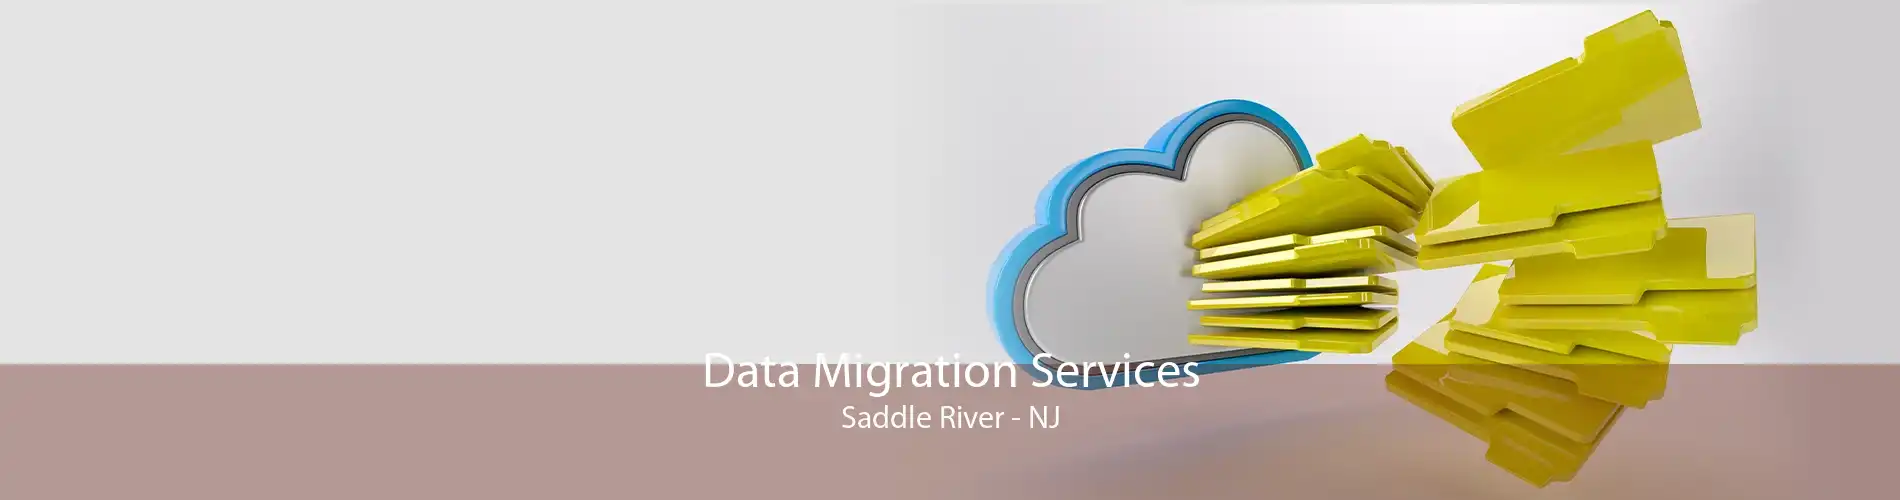 Data Migration Services Saddle River - NJ